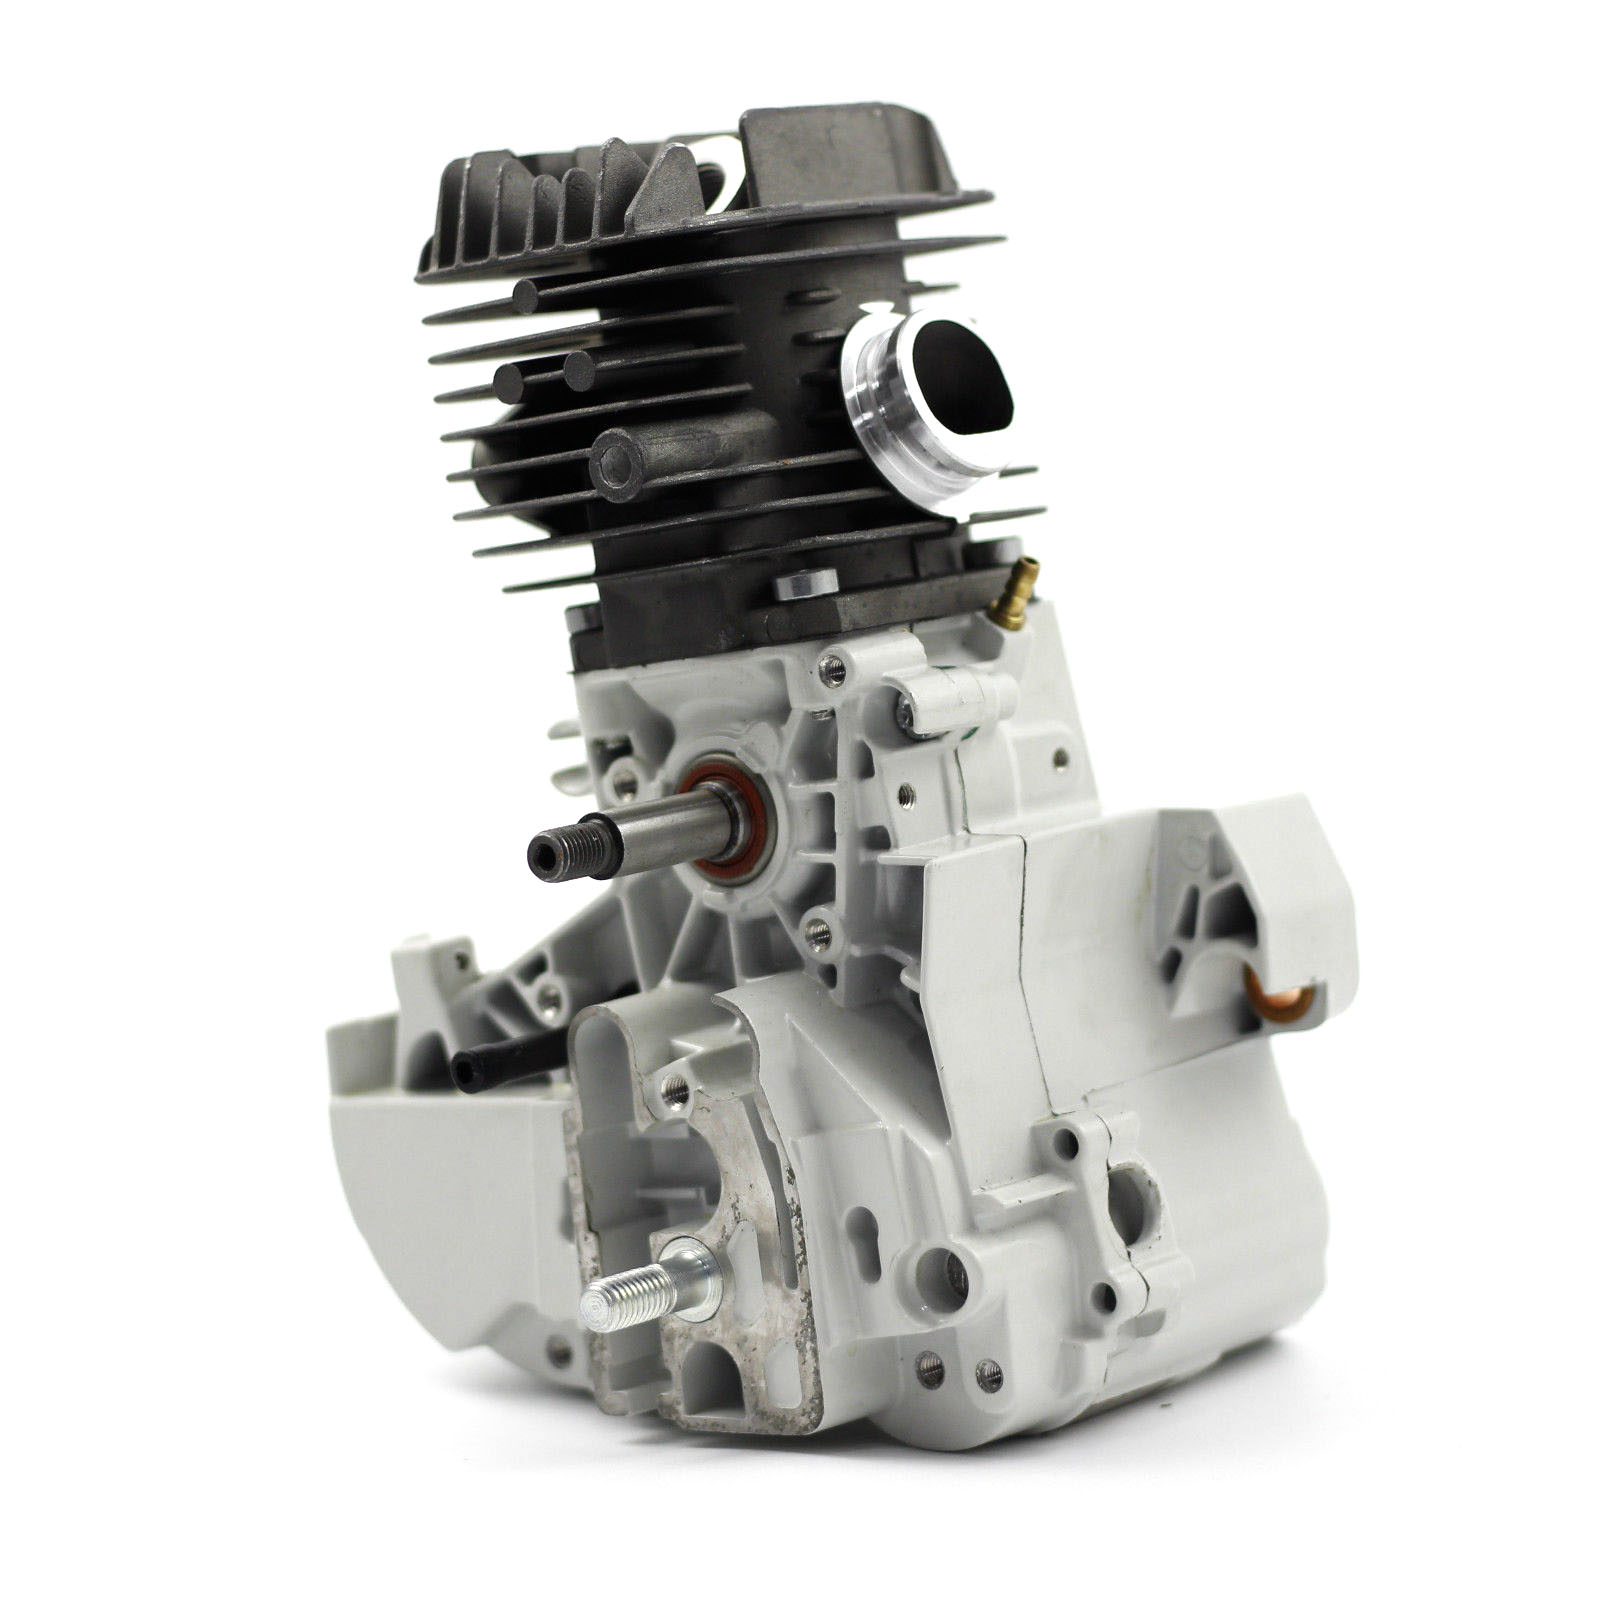 Engine Motor For Stihl MS200T 020T MS200 Chainsaw Crankcase Cylinder Piston Crankshaft # 1129 020 1202， 1129 020 2601， 1129 020 2903，1129 030 0400